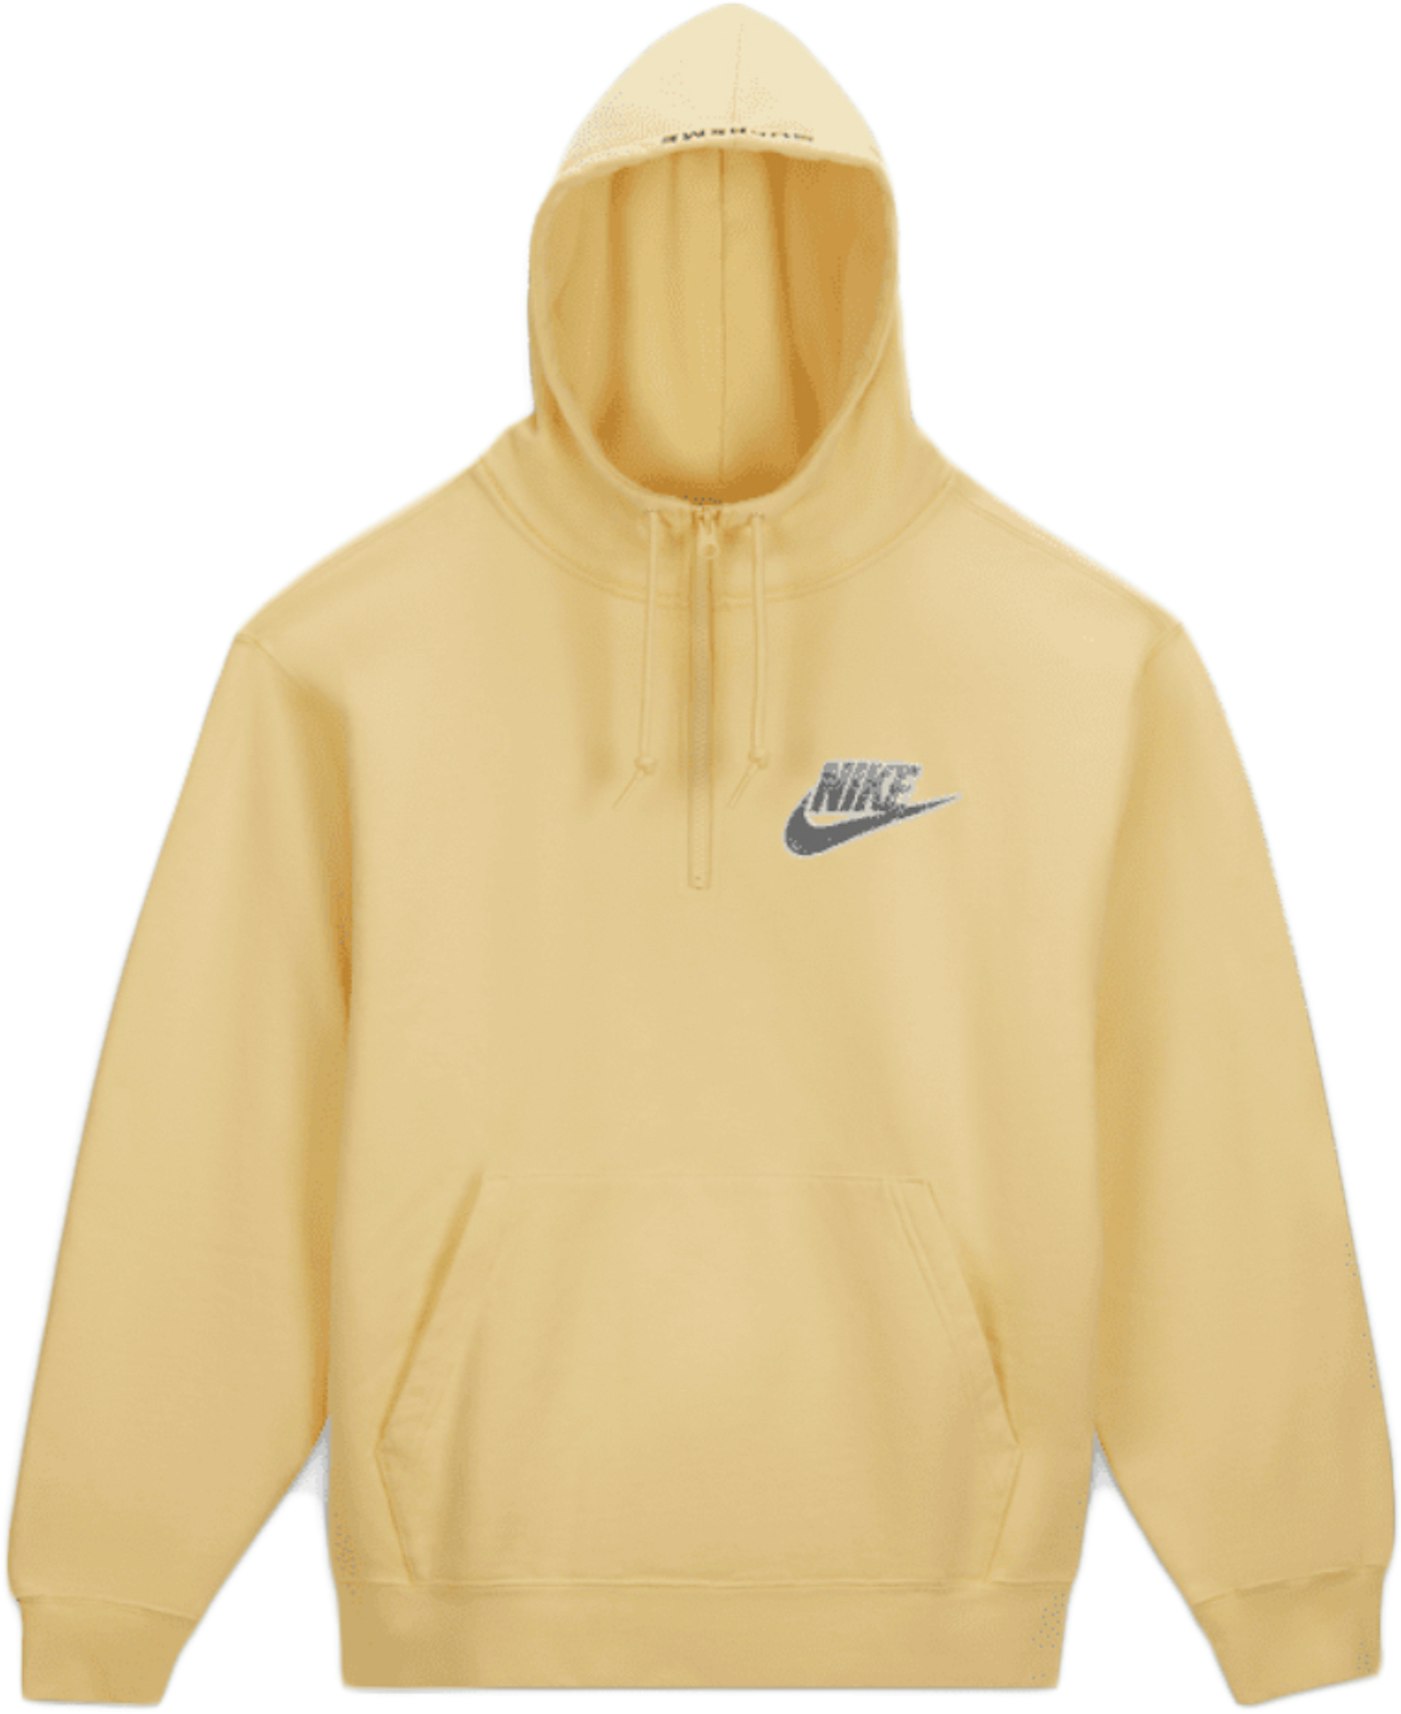 Charlotte Bronte aeropuerto Gracia Supreme Nike Half Zip Hooded Sweatshirt Pale Yellow - SS21 Men's - US